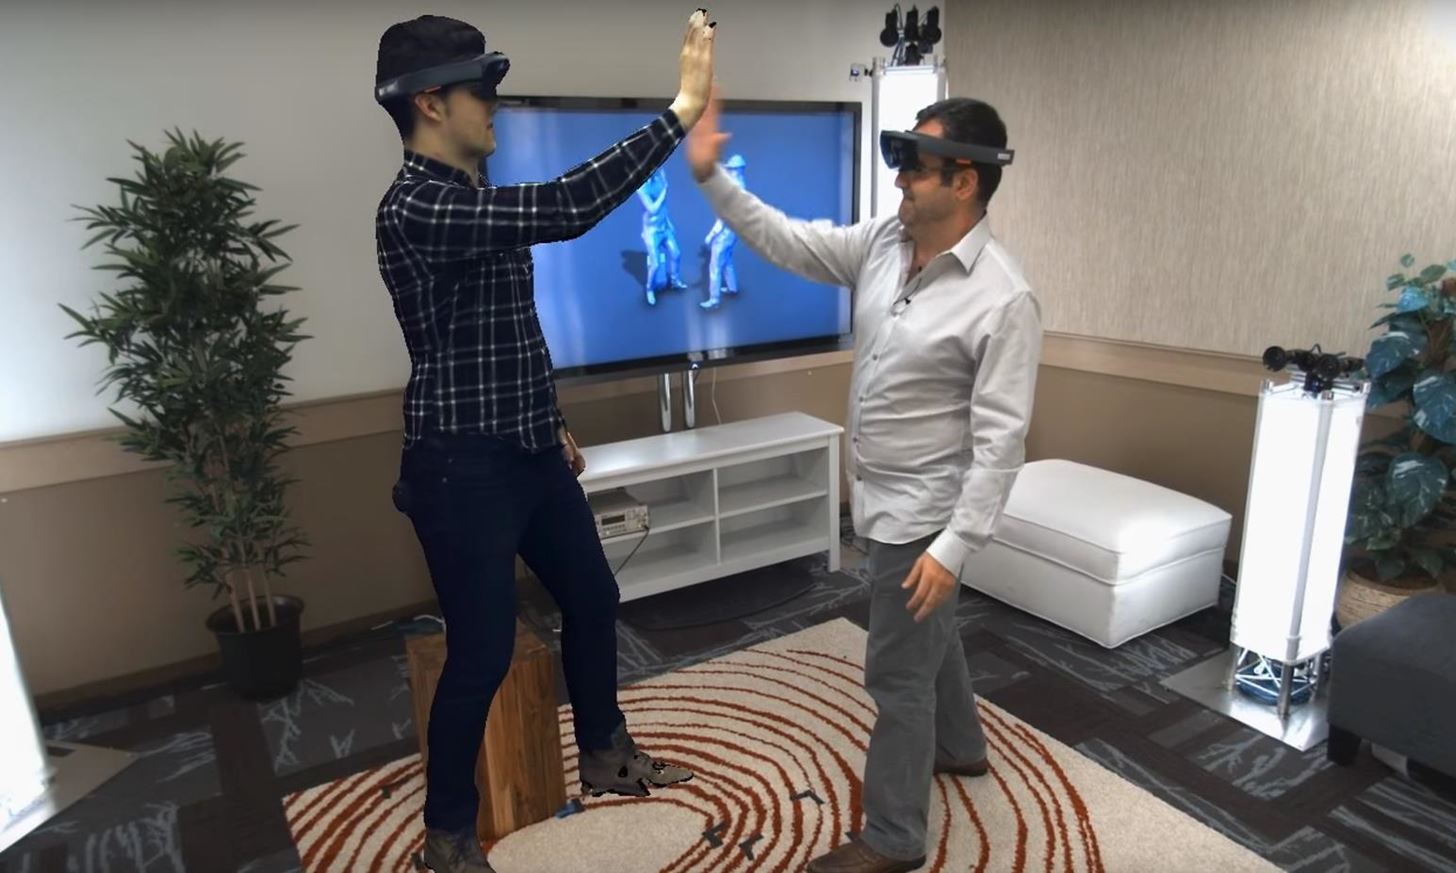 Microsoft HoloLens Makes Virtual Teleportation a Reality